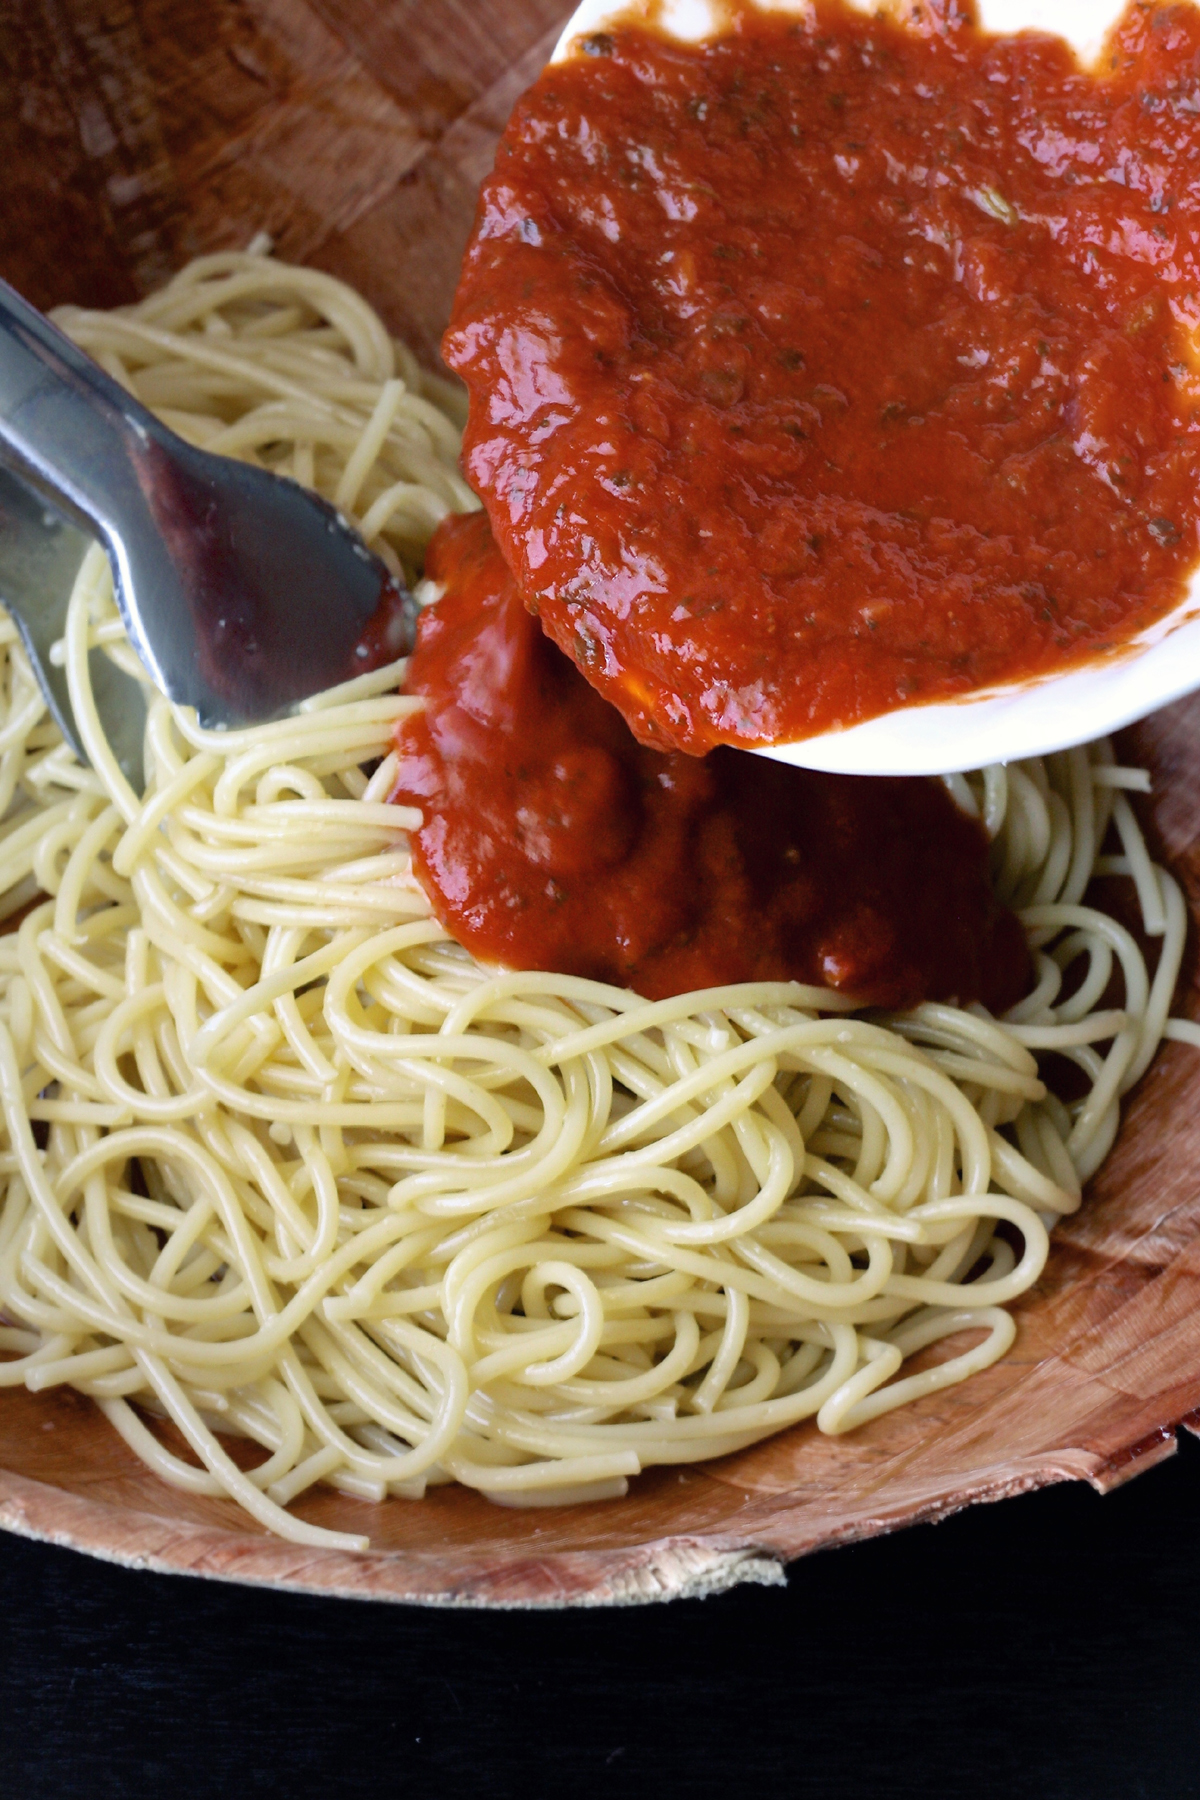 How to Make Your Own Homemade Spaghetti Sauce